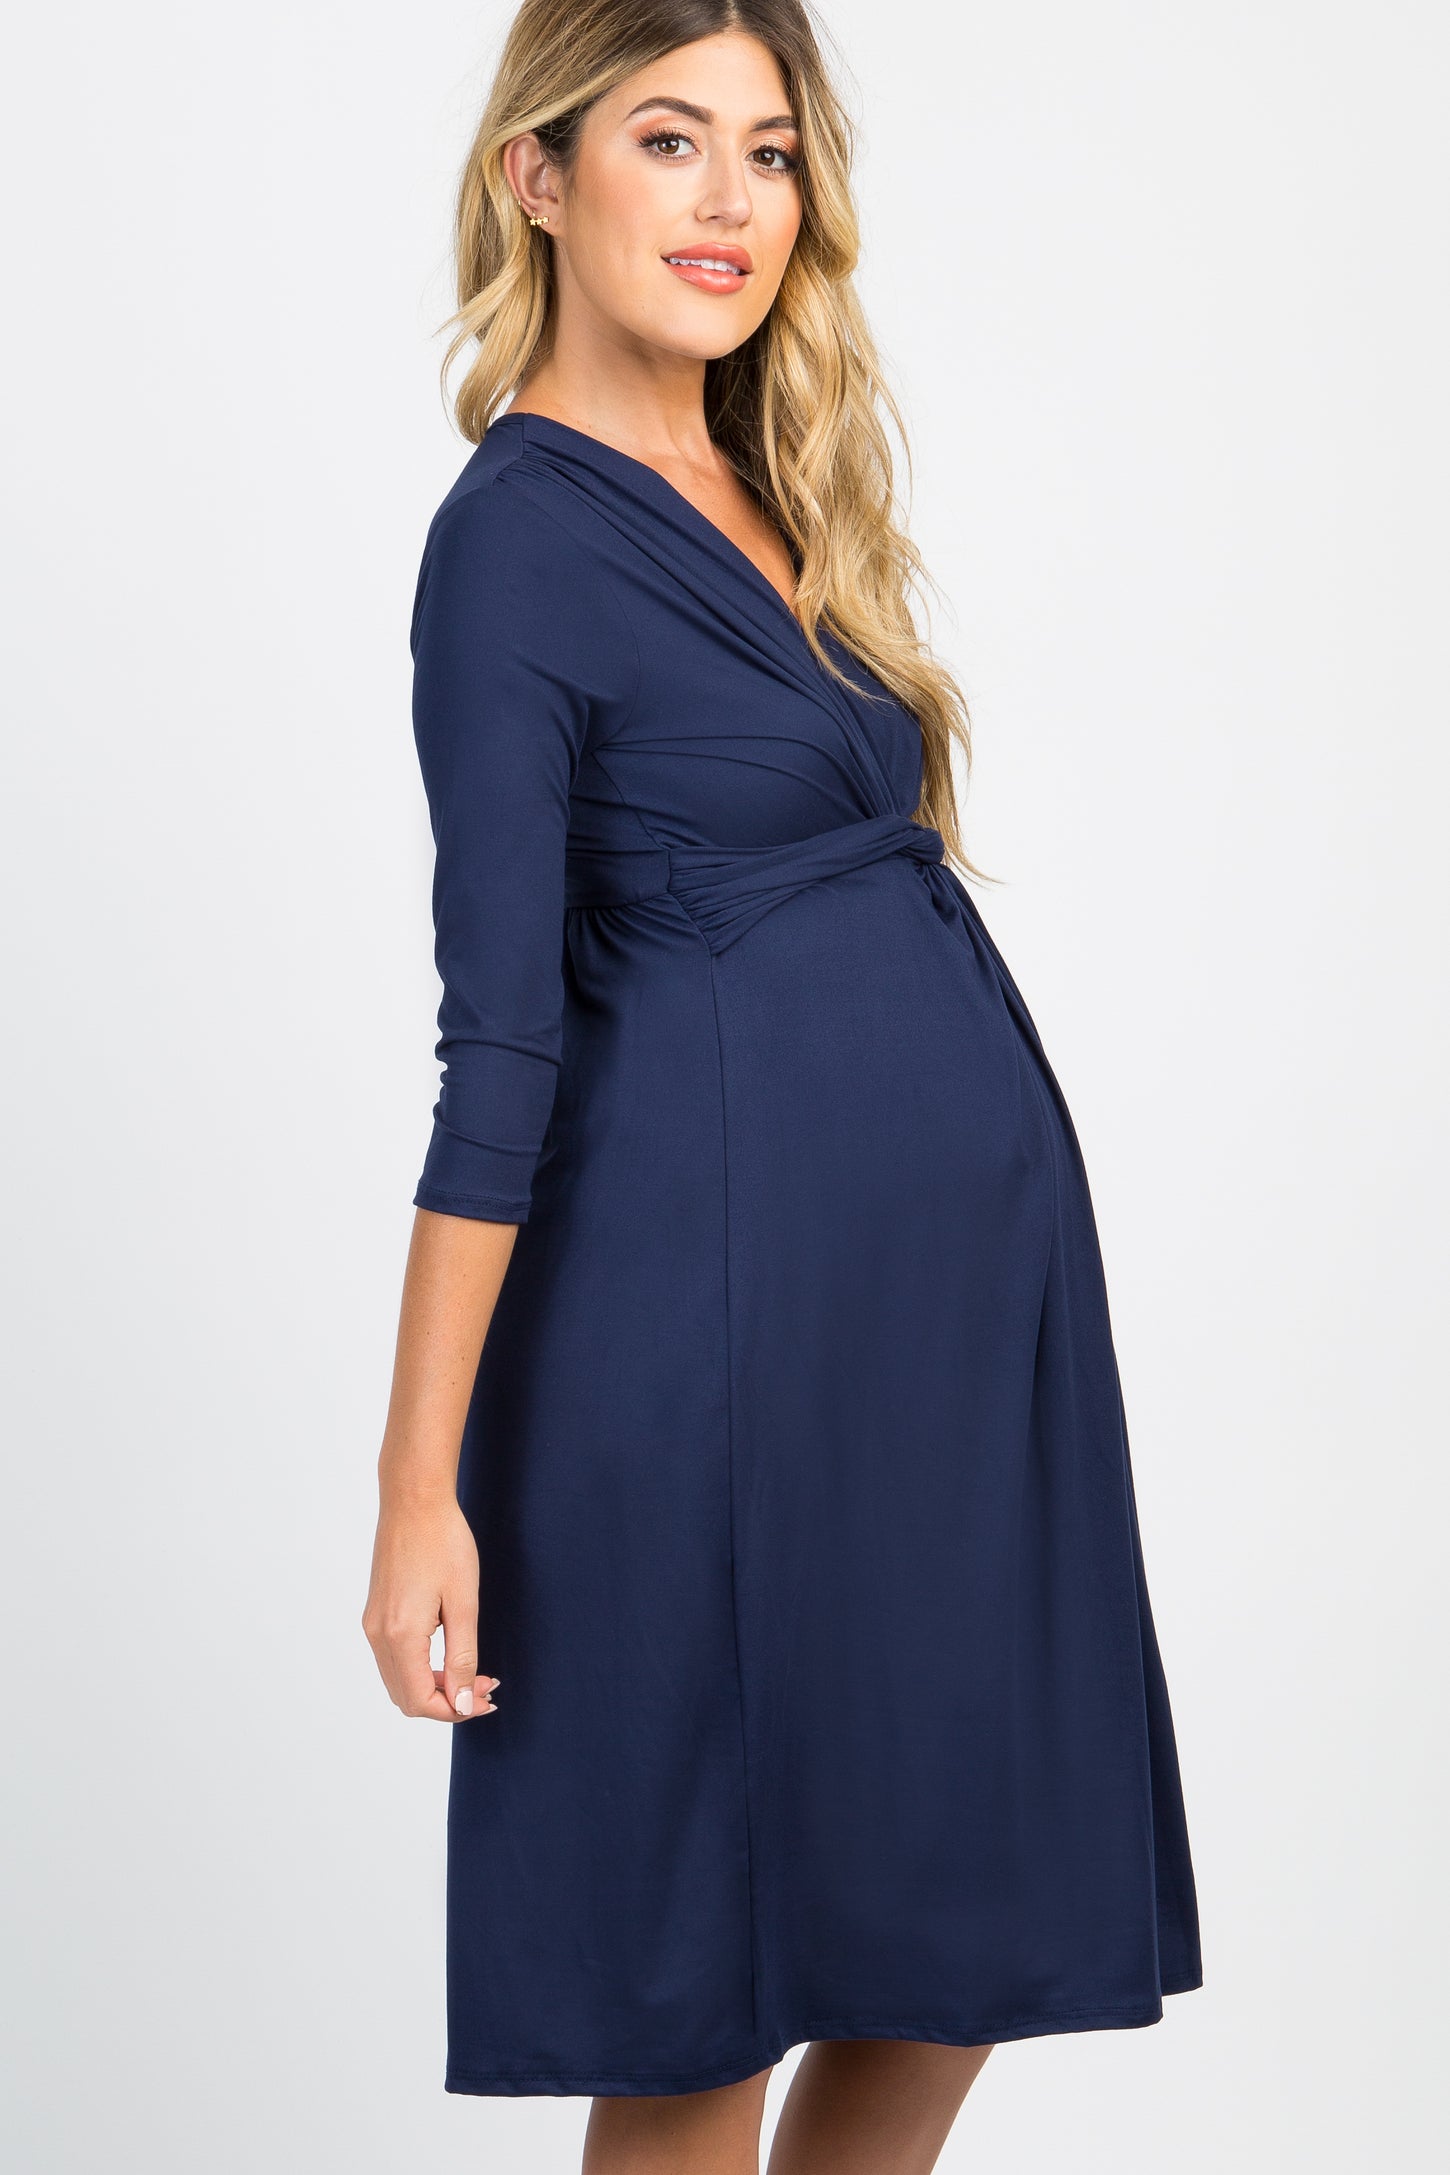 Navy Blue Twist Front 3/4 Sleeve Maternity Dress